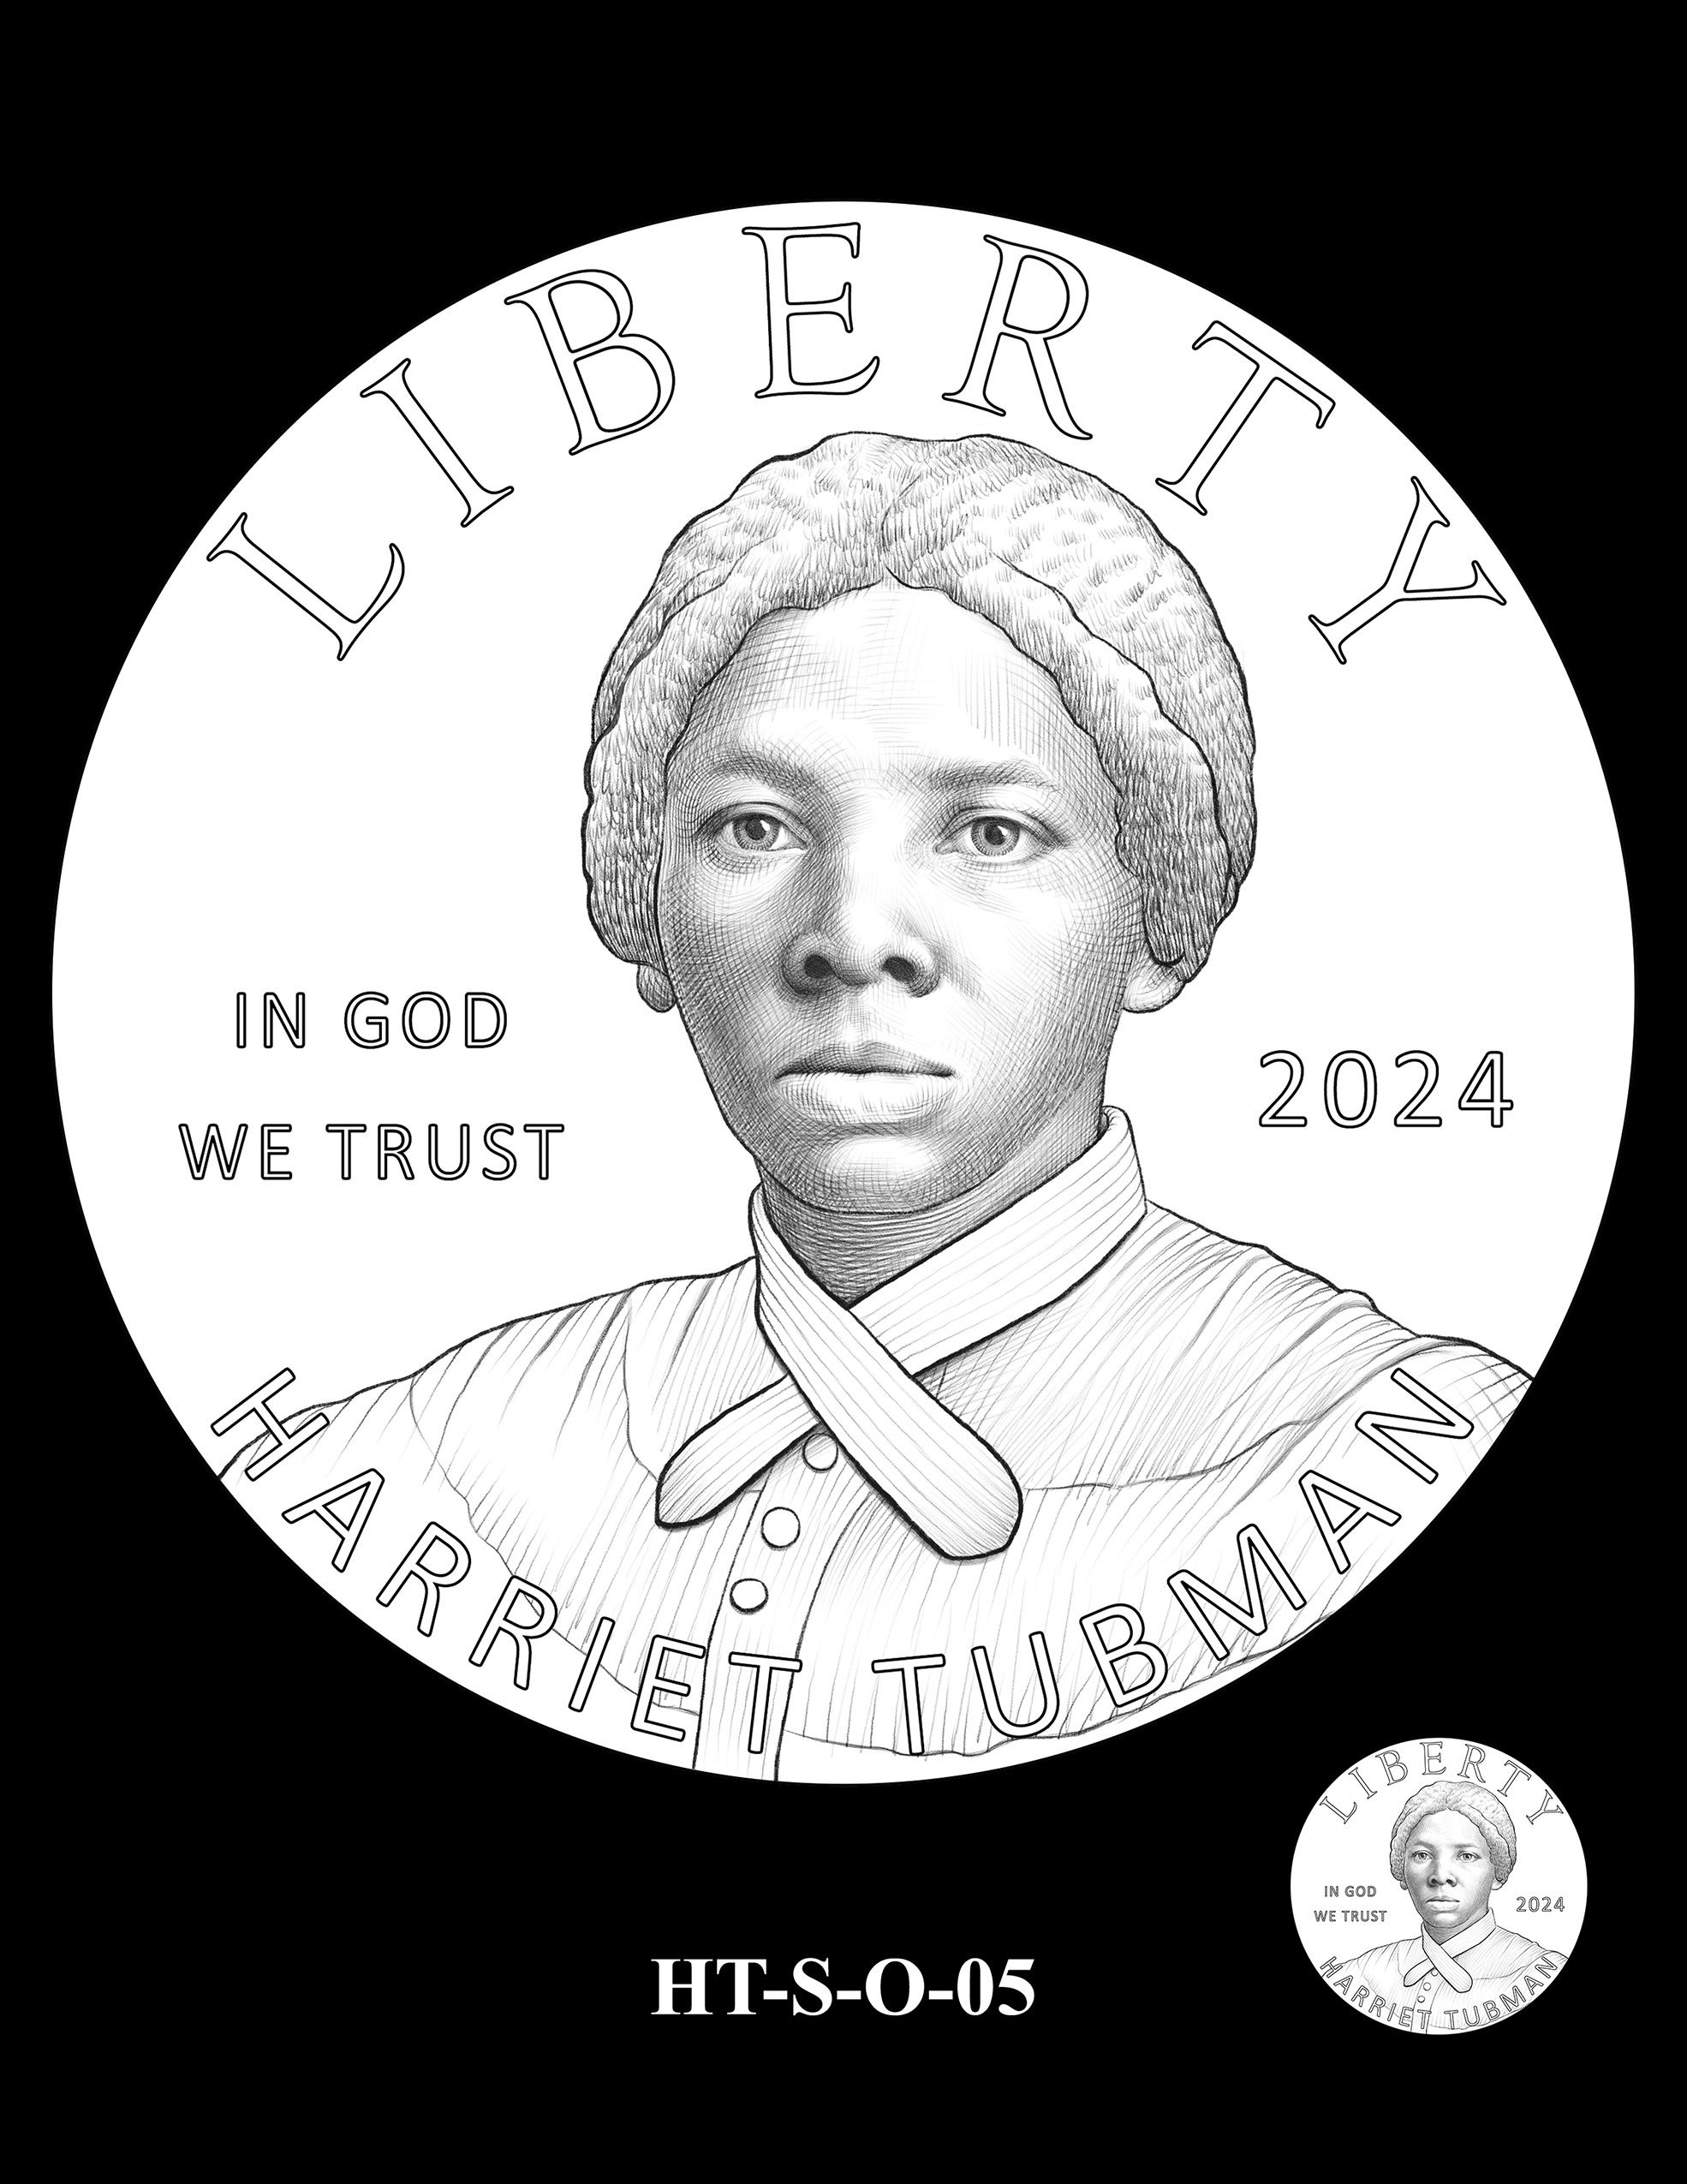 HT-S-O-05 -- Harriet Tubman